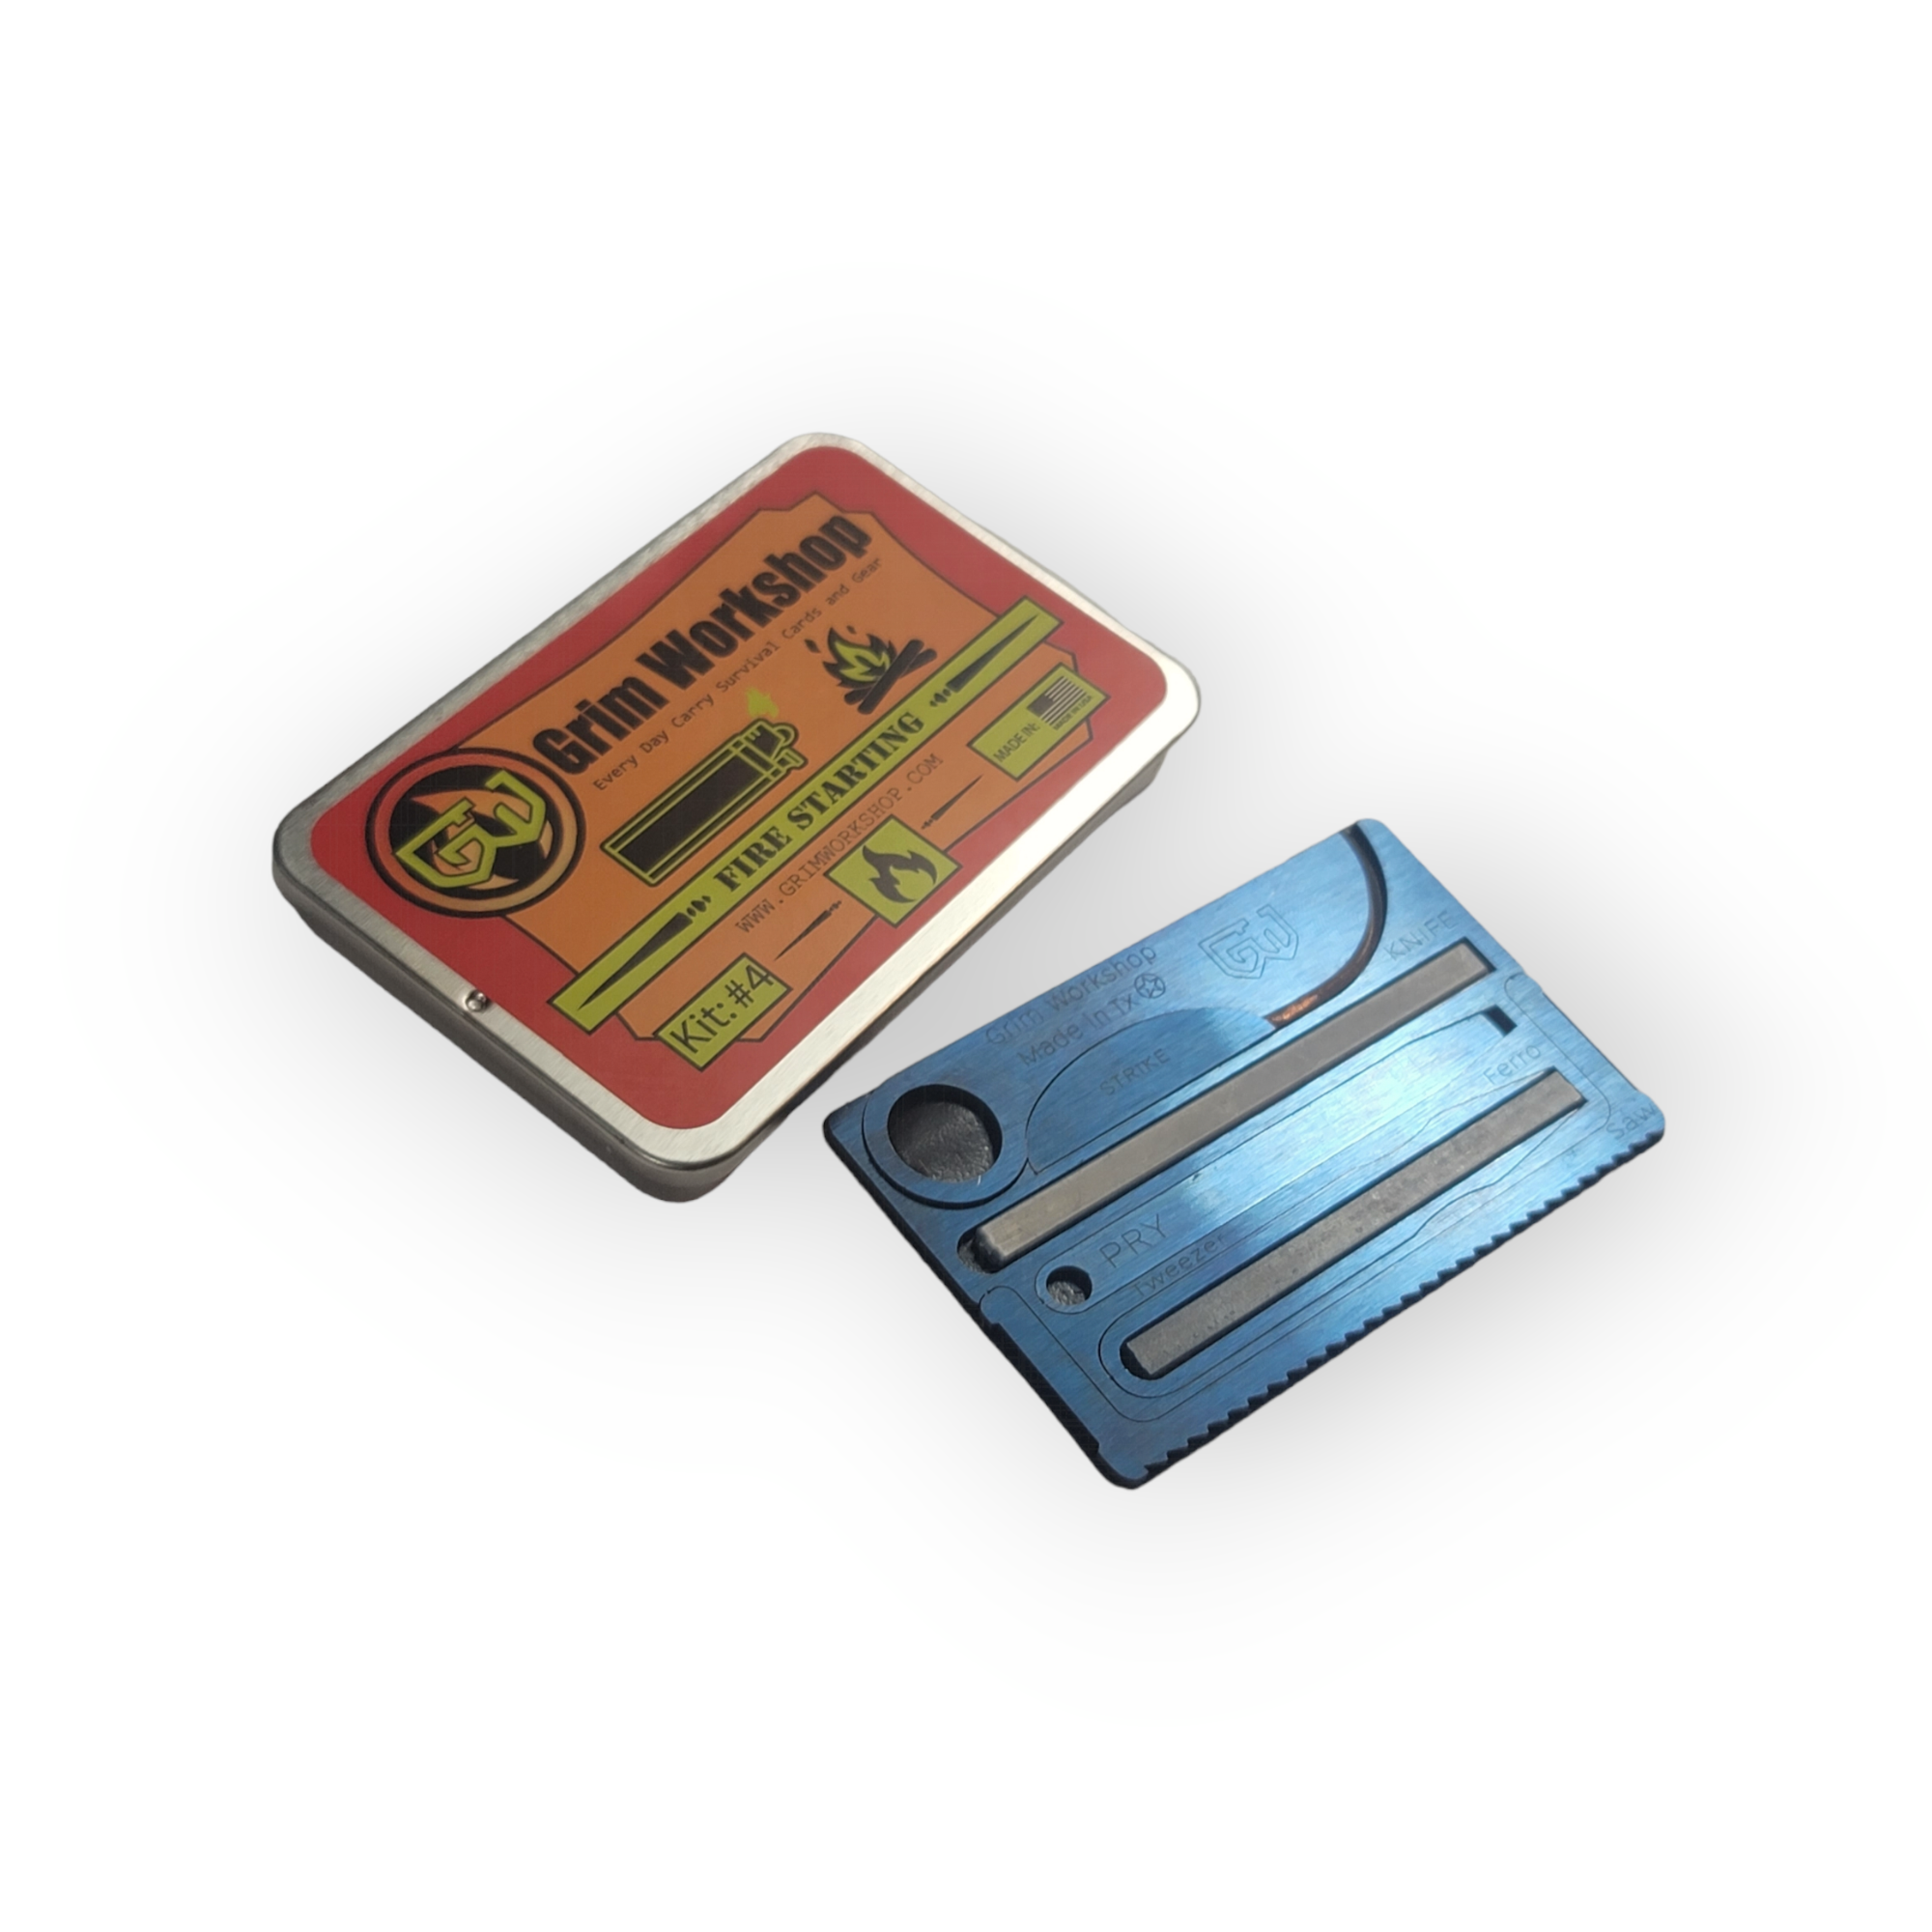 Hot Shot Fire Starting Card Gen2: Survival Knife With Fire Starter Kit (PRE ORDER)